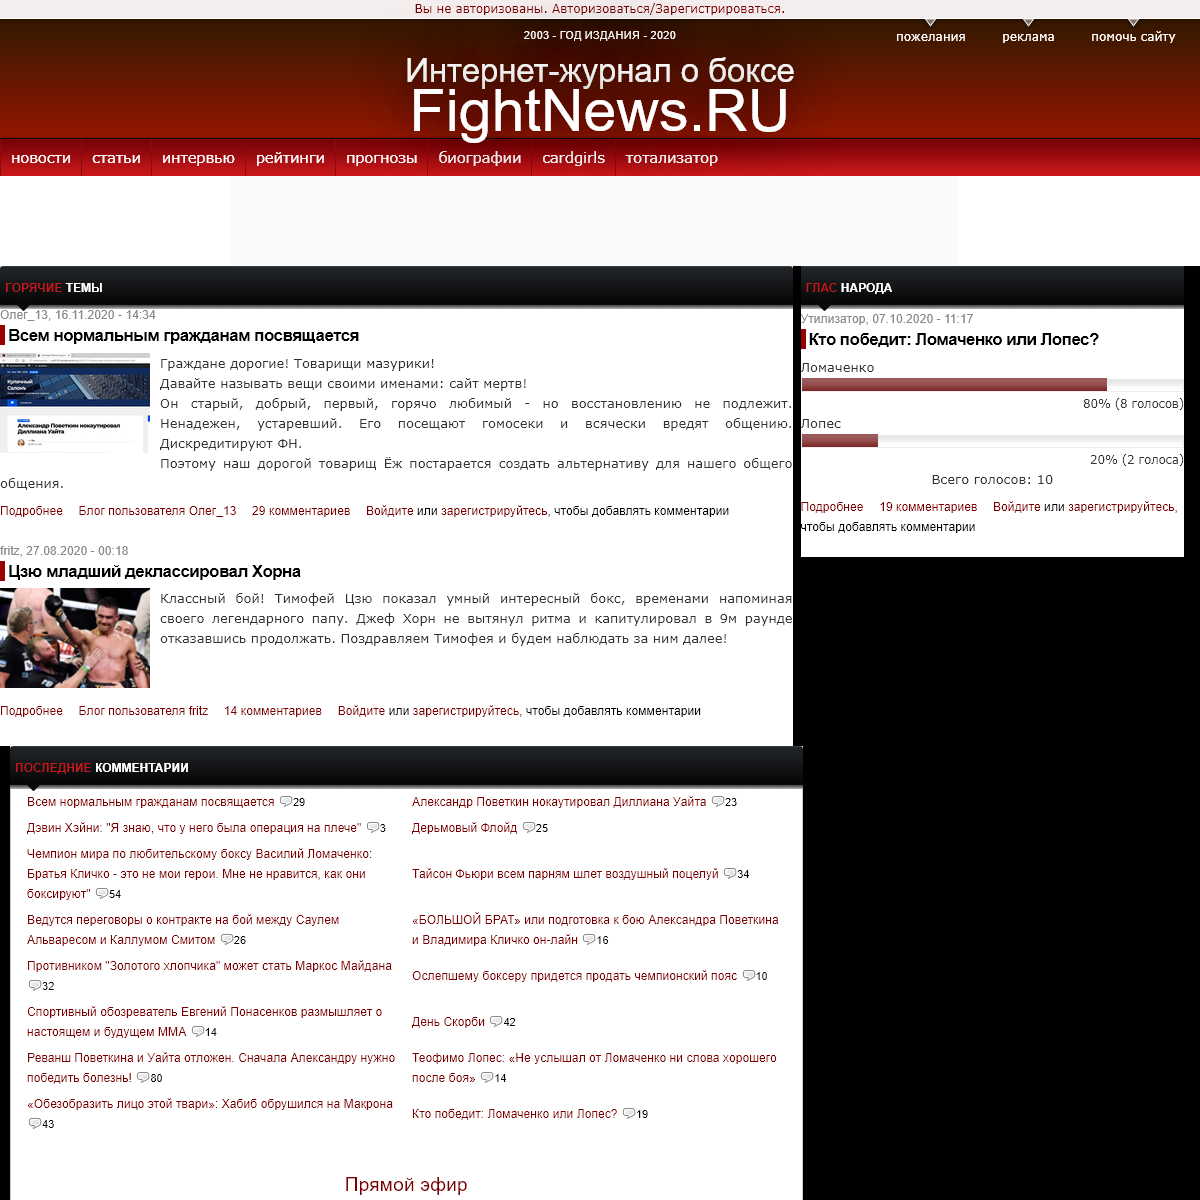 A complete backup of fightnews.ru